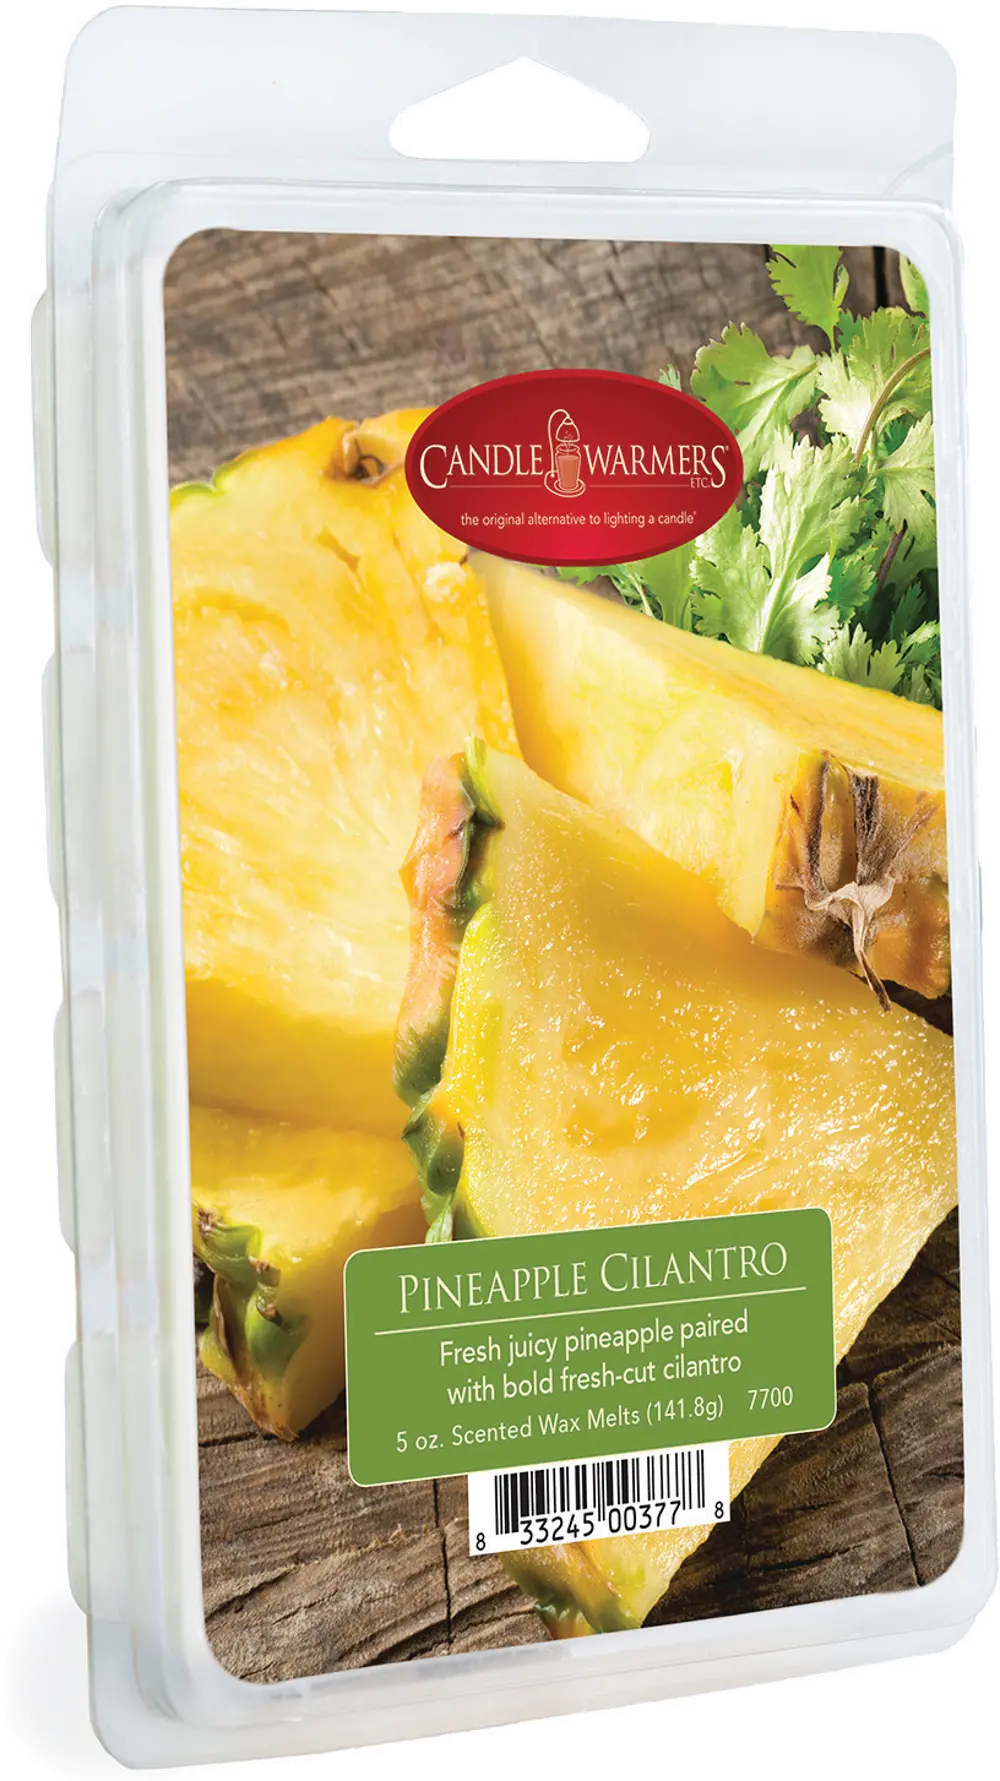 Pineapple Cilantro 5oz Wax Melt-1